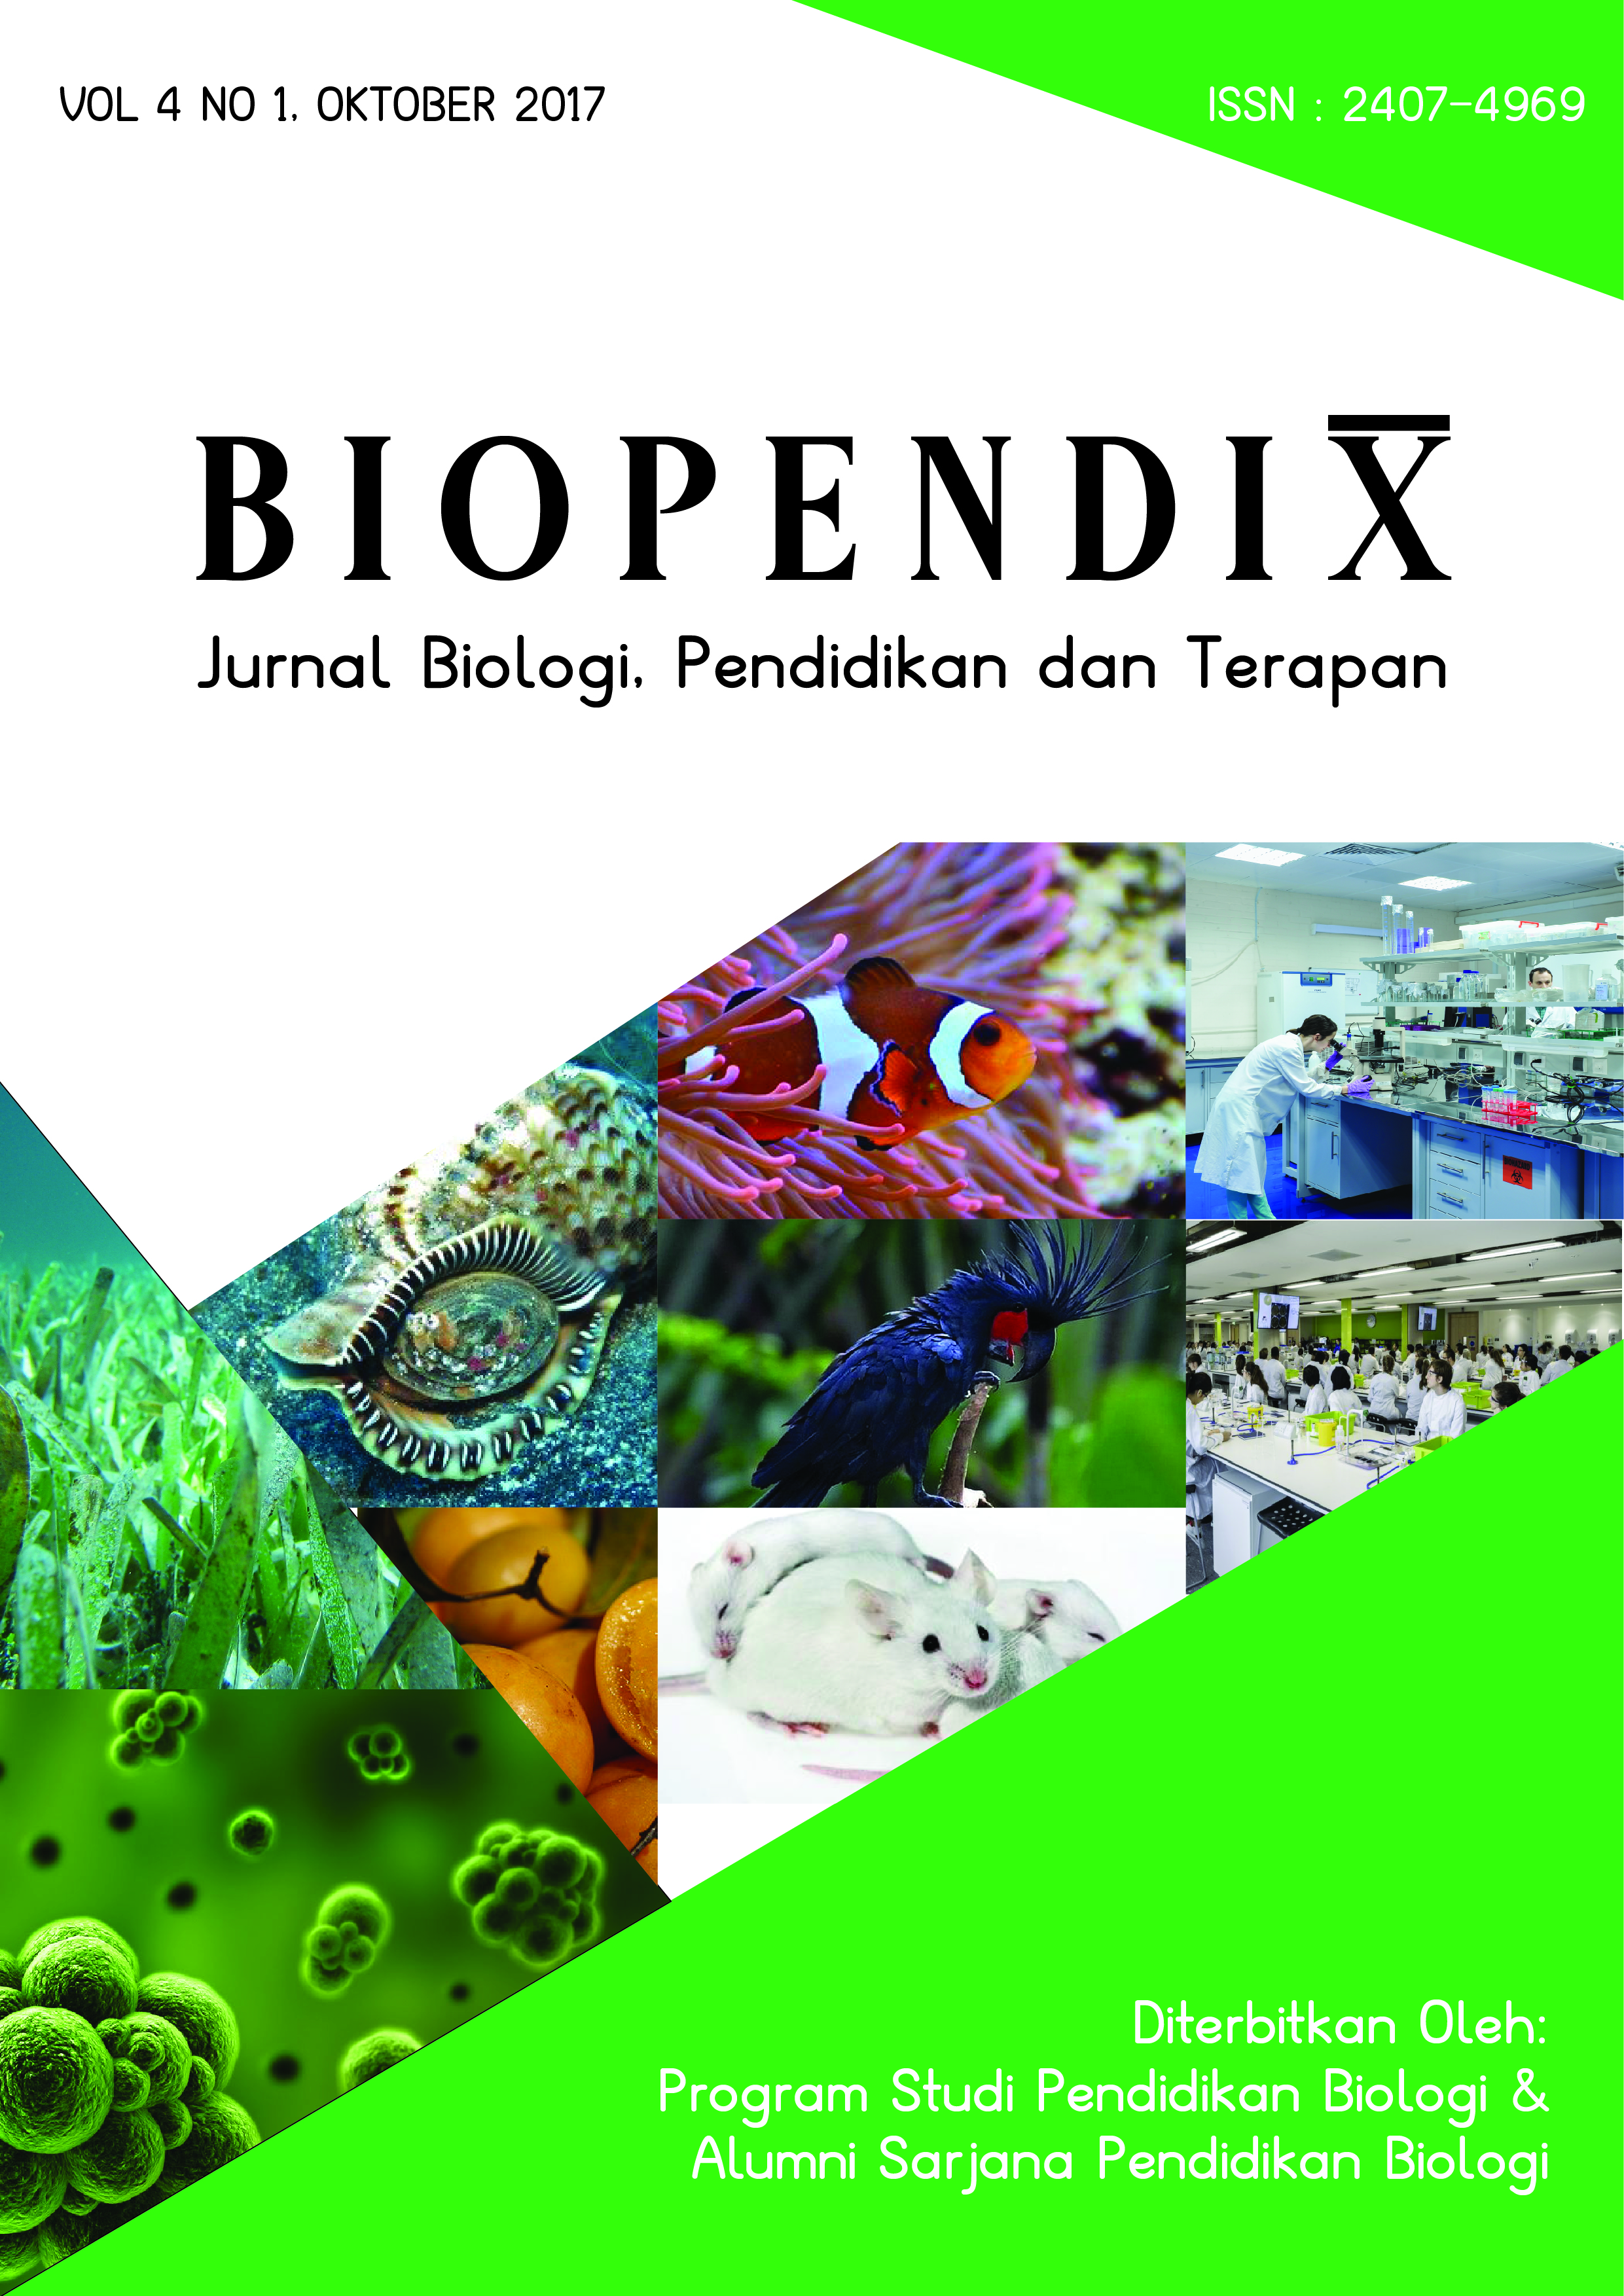 PDF Fulltext in Bahasa Indonesia